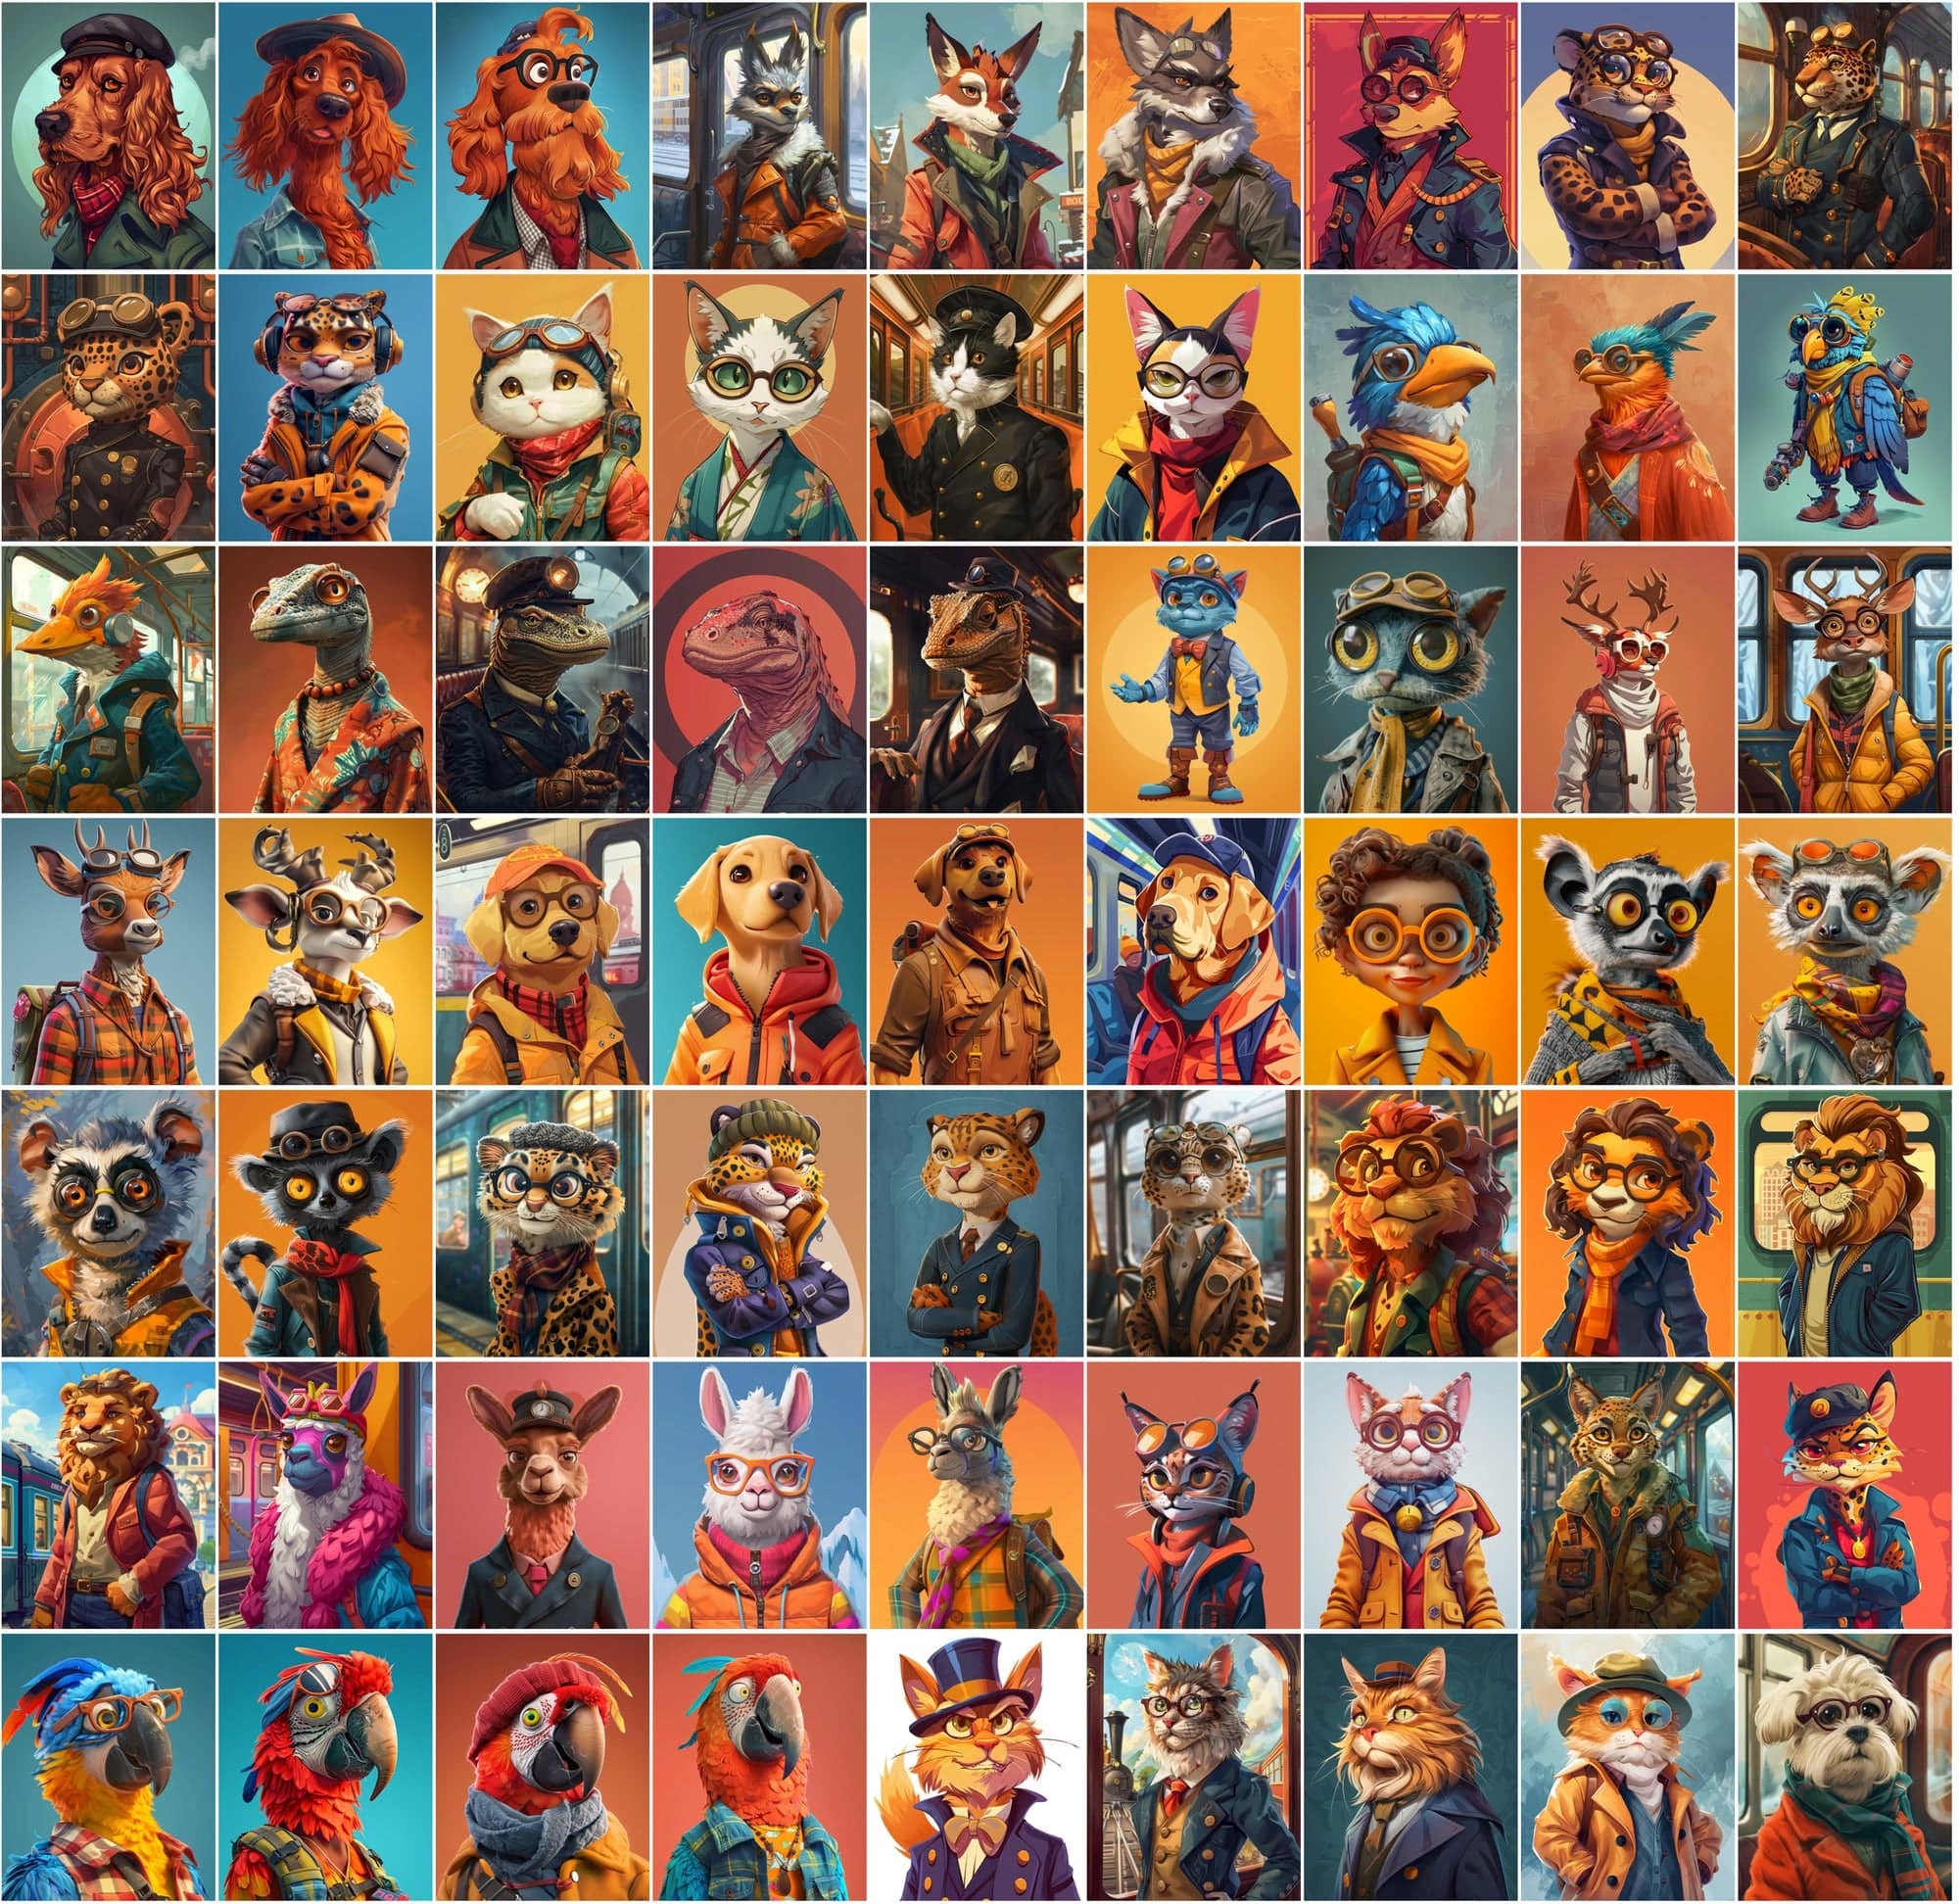 890 Colorful Cartoon Animals and 110 People Images Digital Download Sumobundle